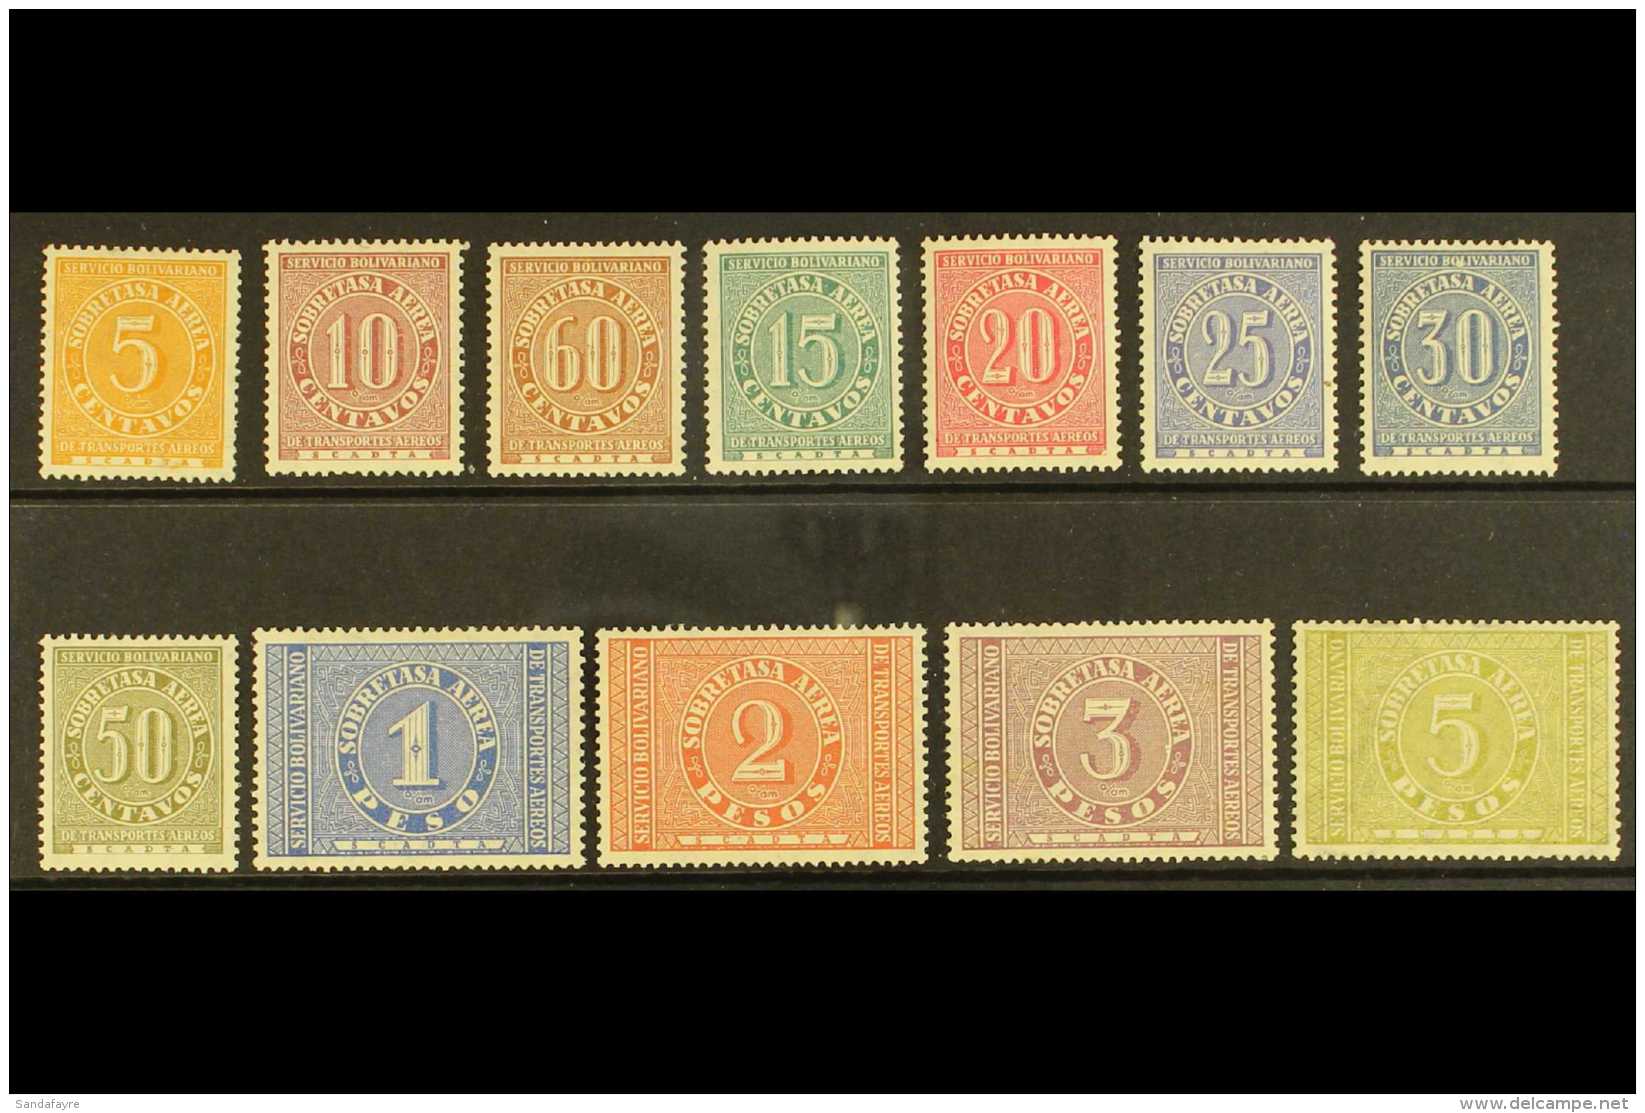 SCADTA 1929 Numerals - For International Airmail Complete Set (Scott C68/79, SG 71/82, Michel 1/12), Fine Mint,... - Colombia